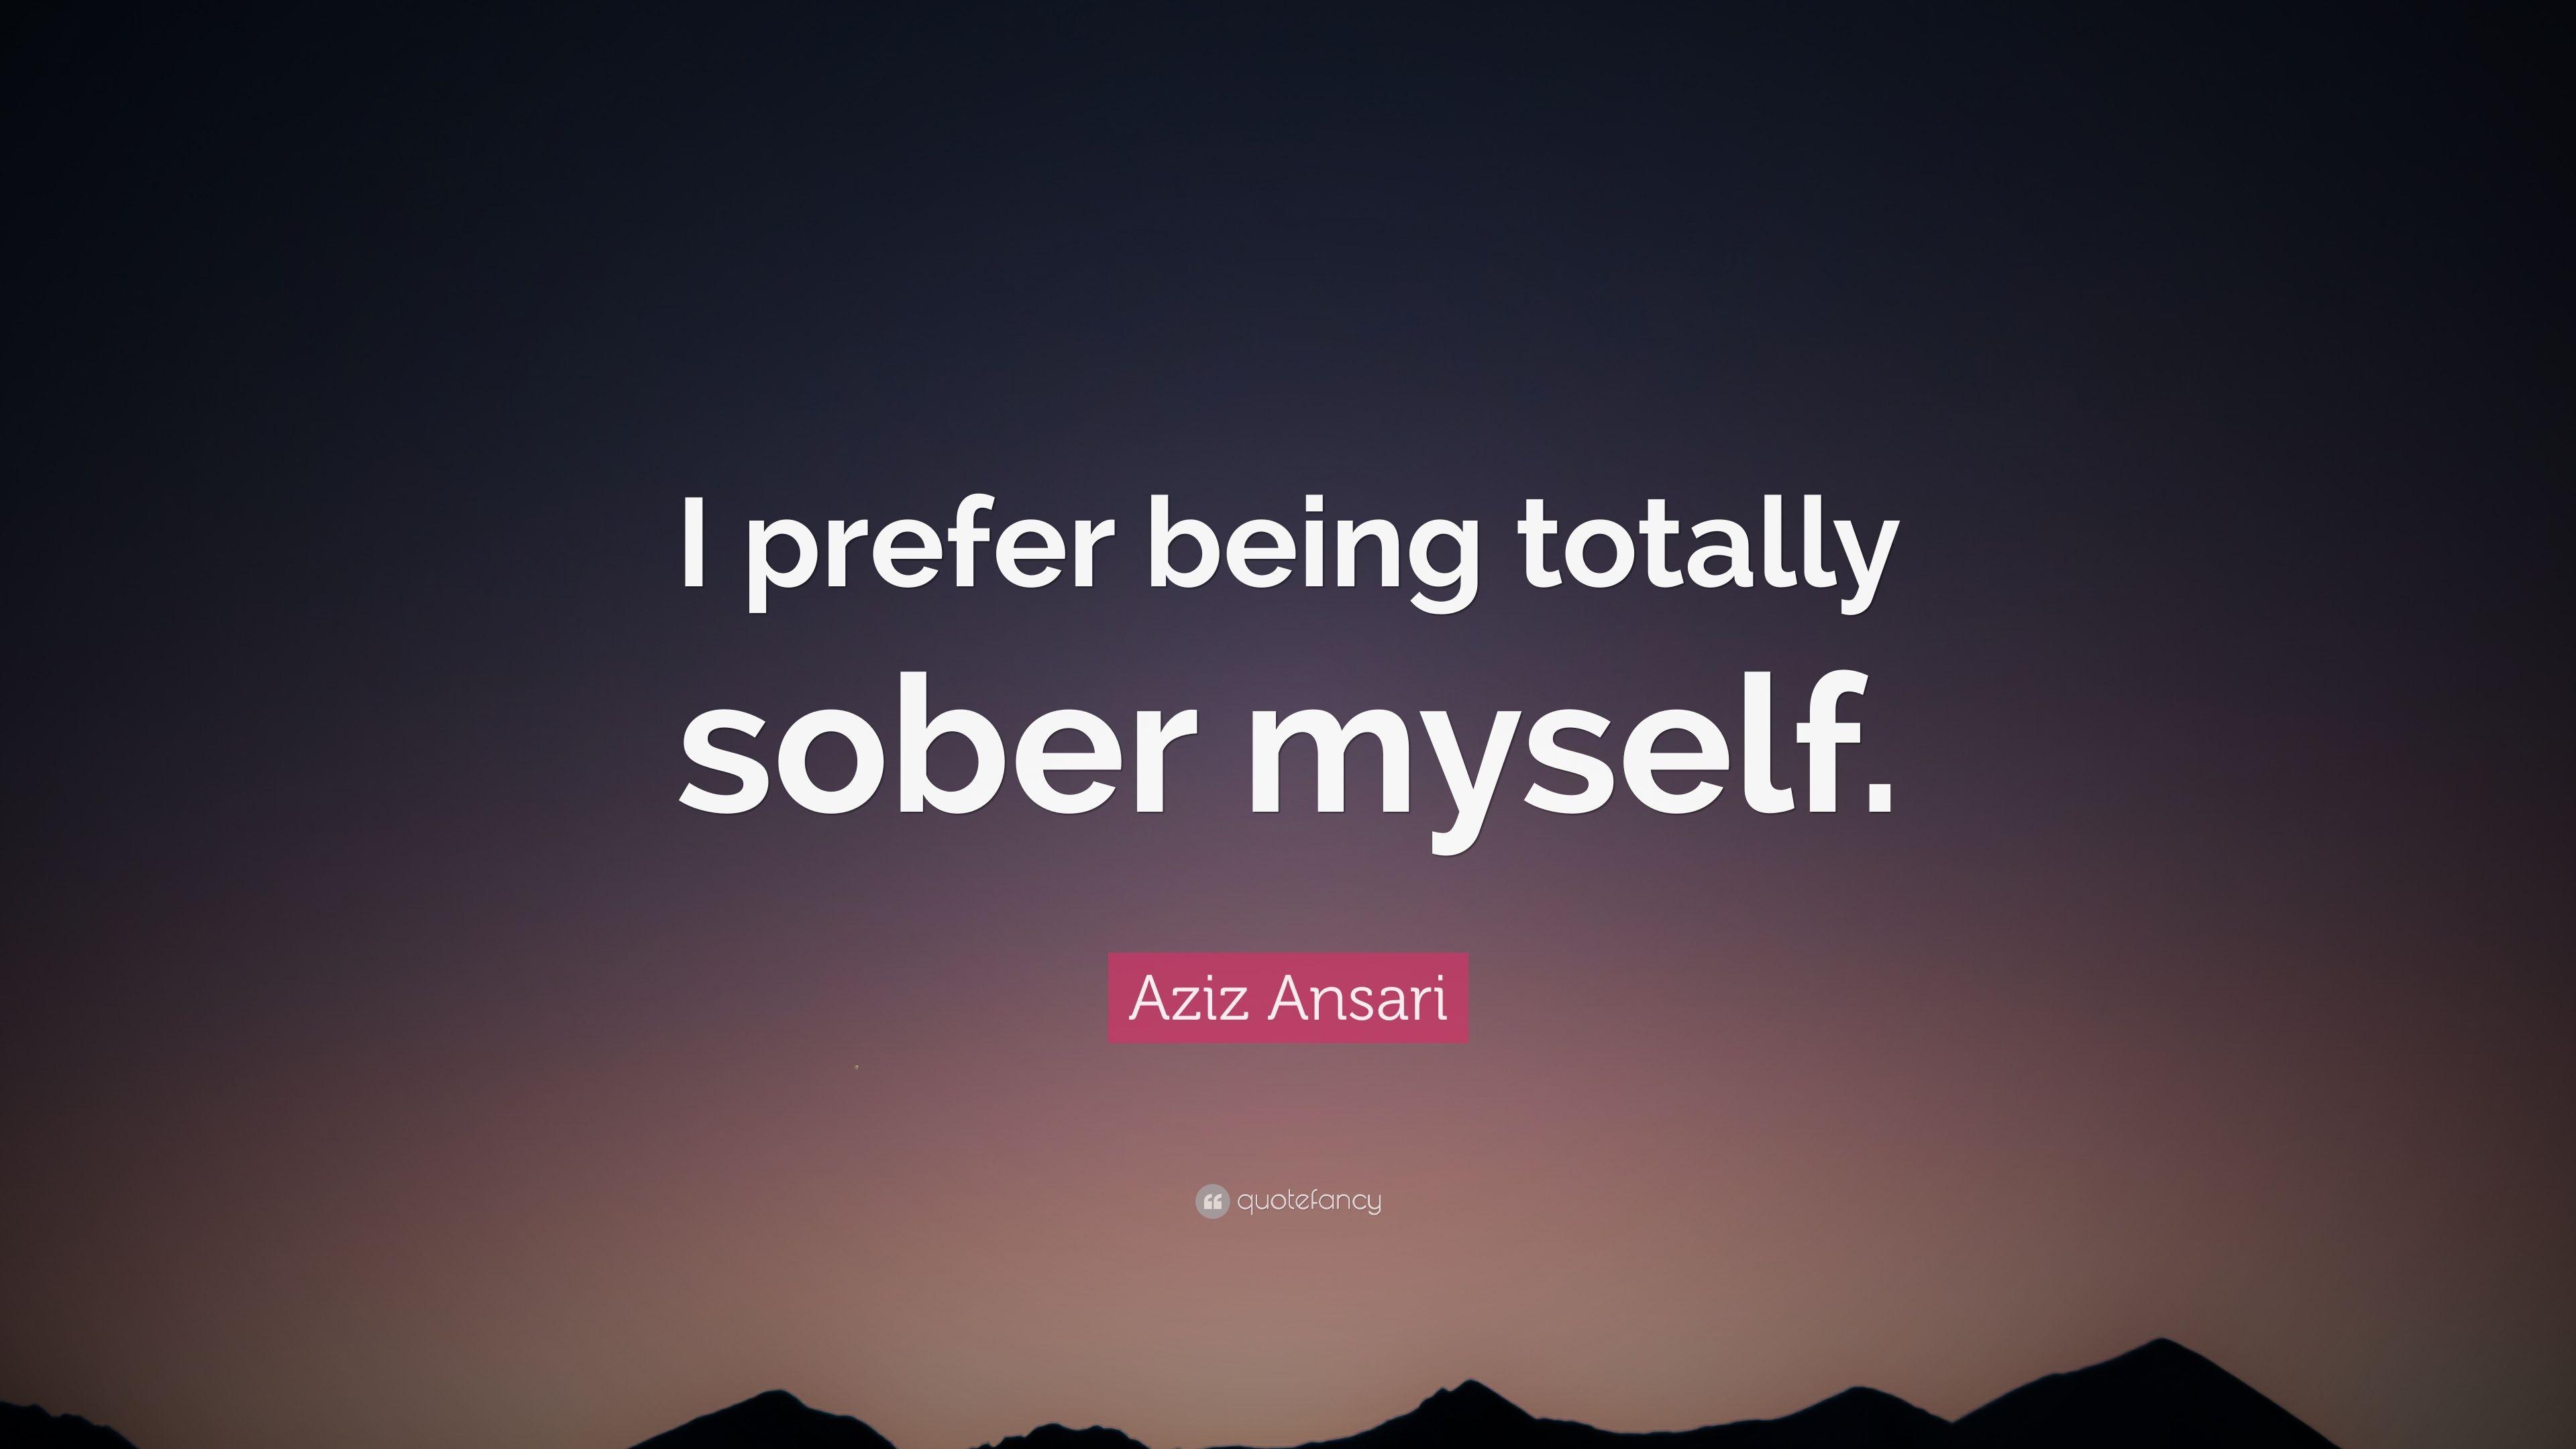 Aziz Ansari Quote: “I prefer being totally sober myself.” 7